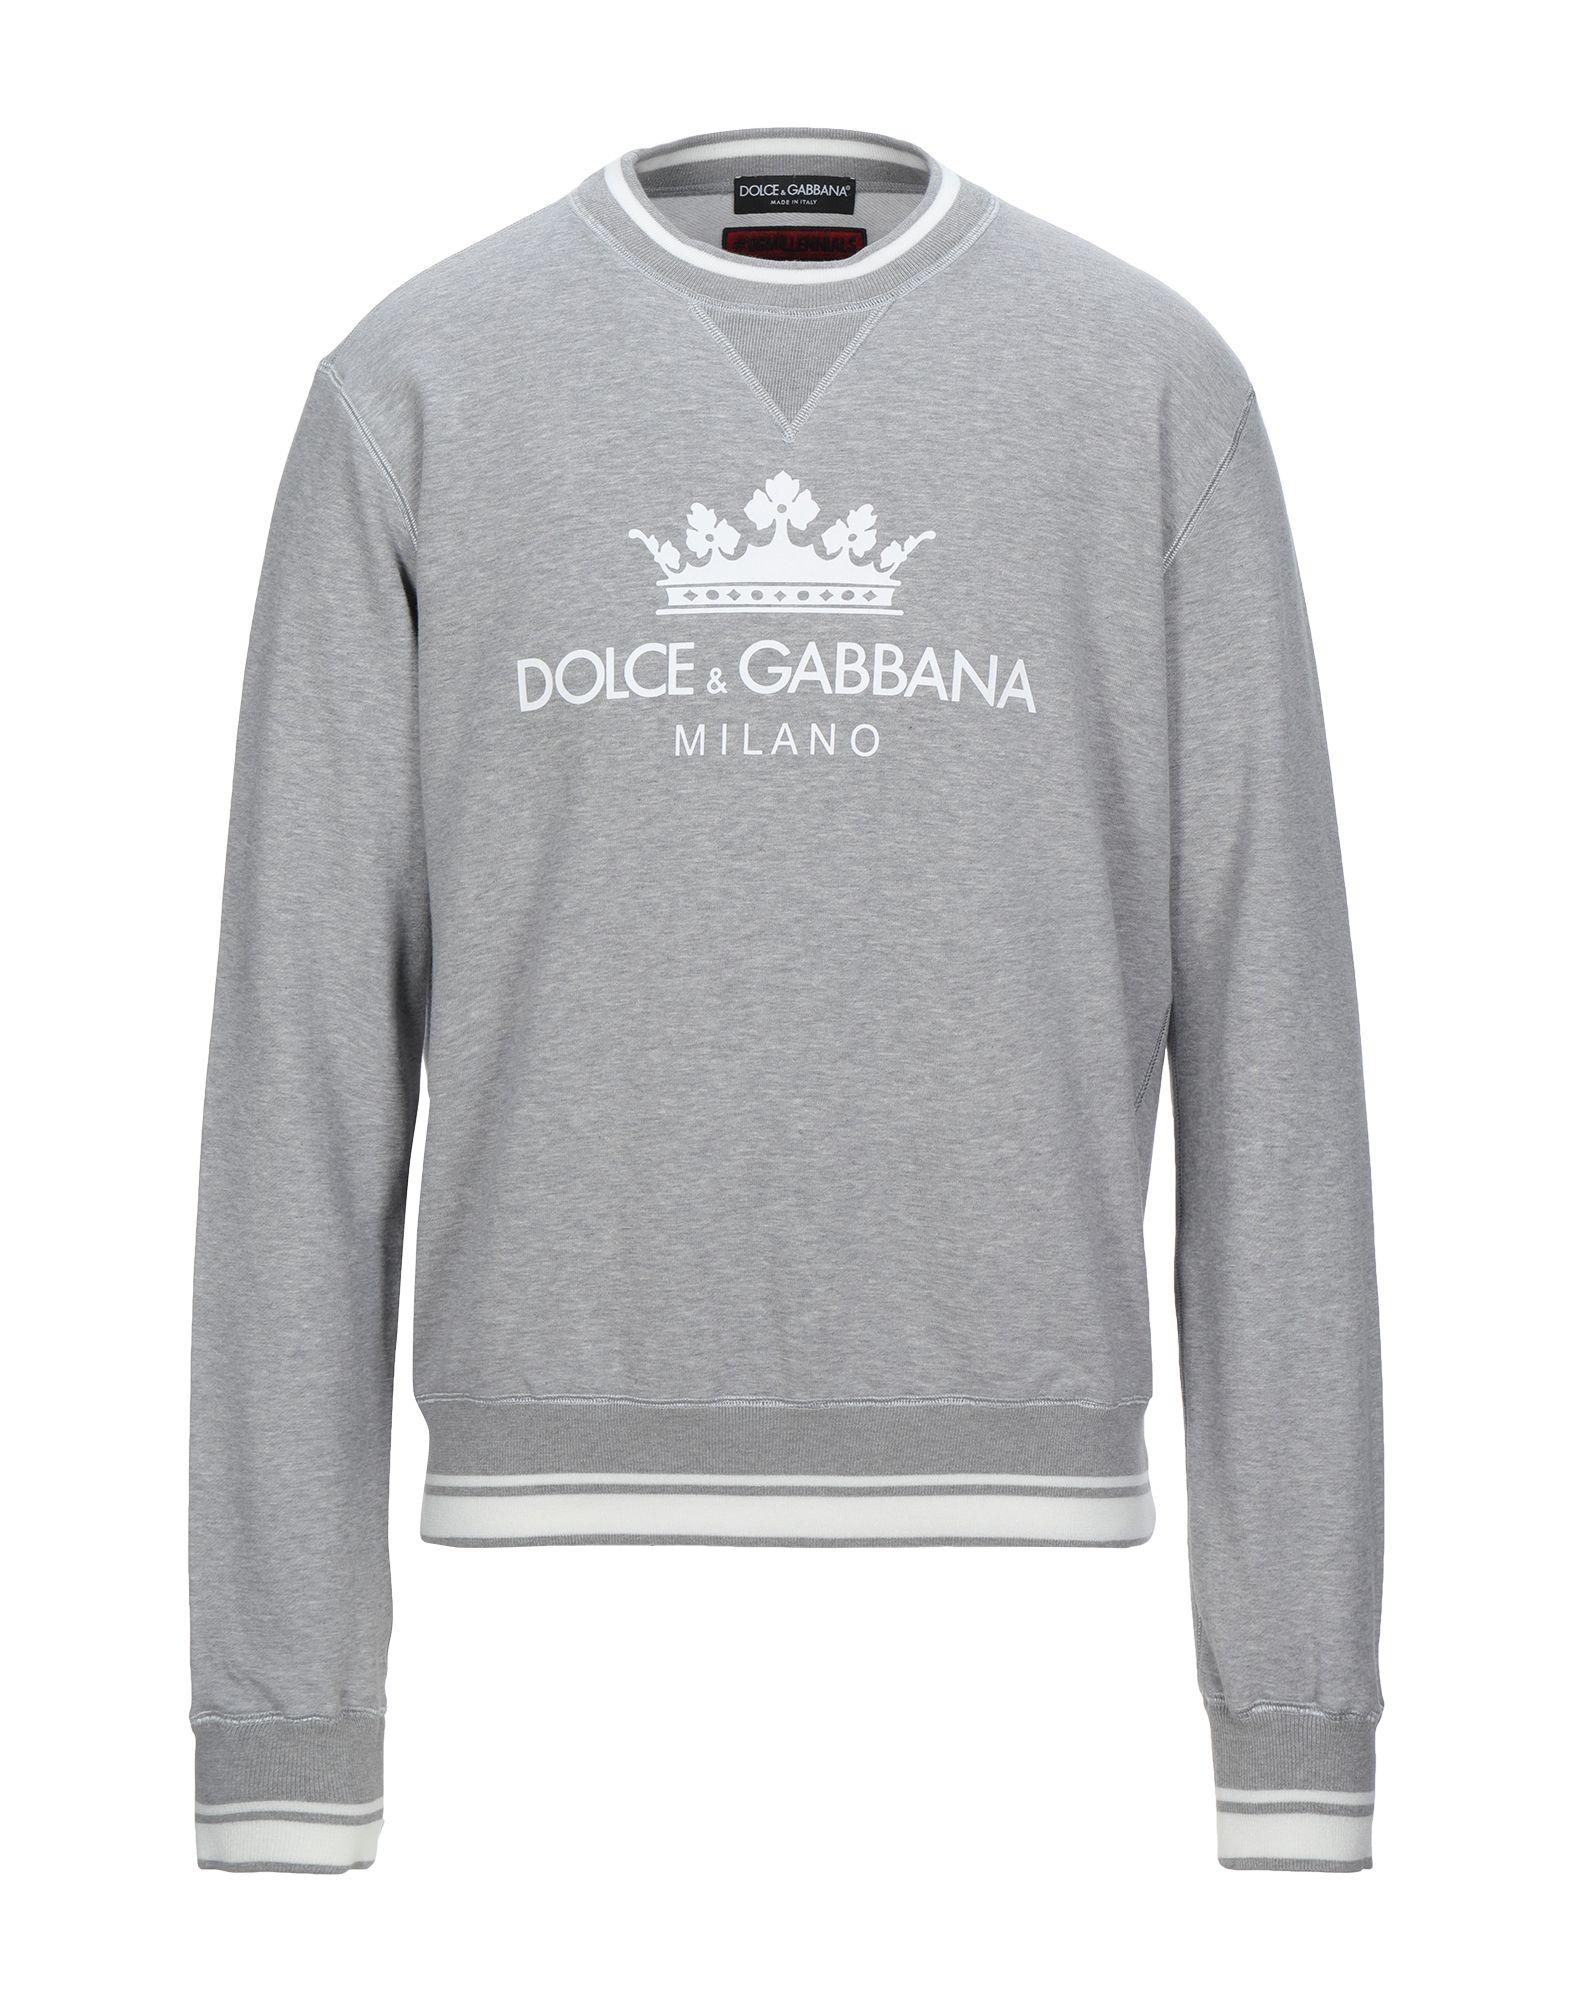 dolce and gabbana milano logo crew sweatshirt